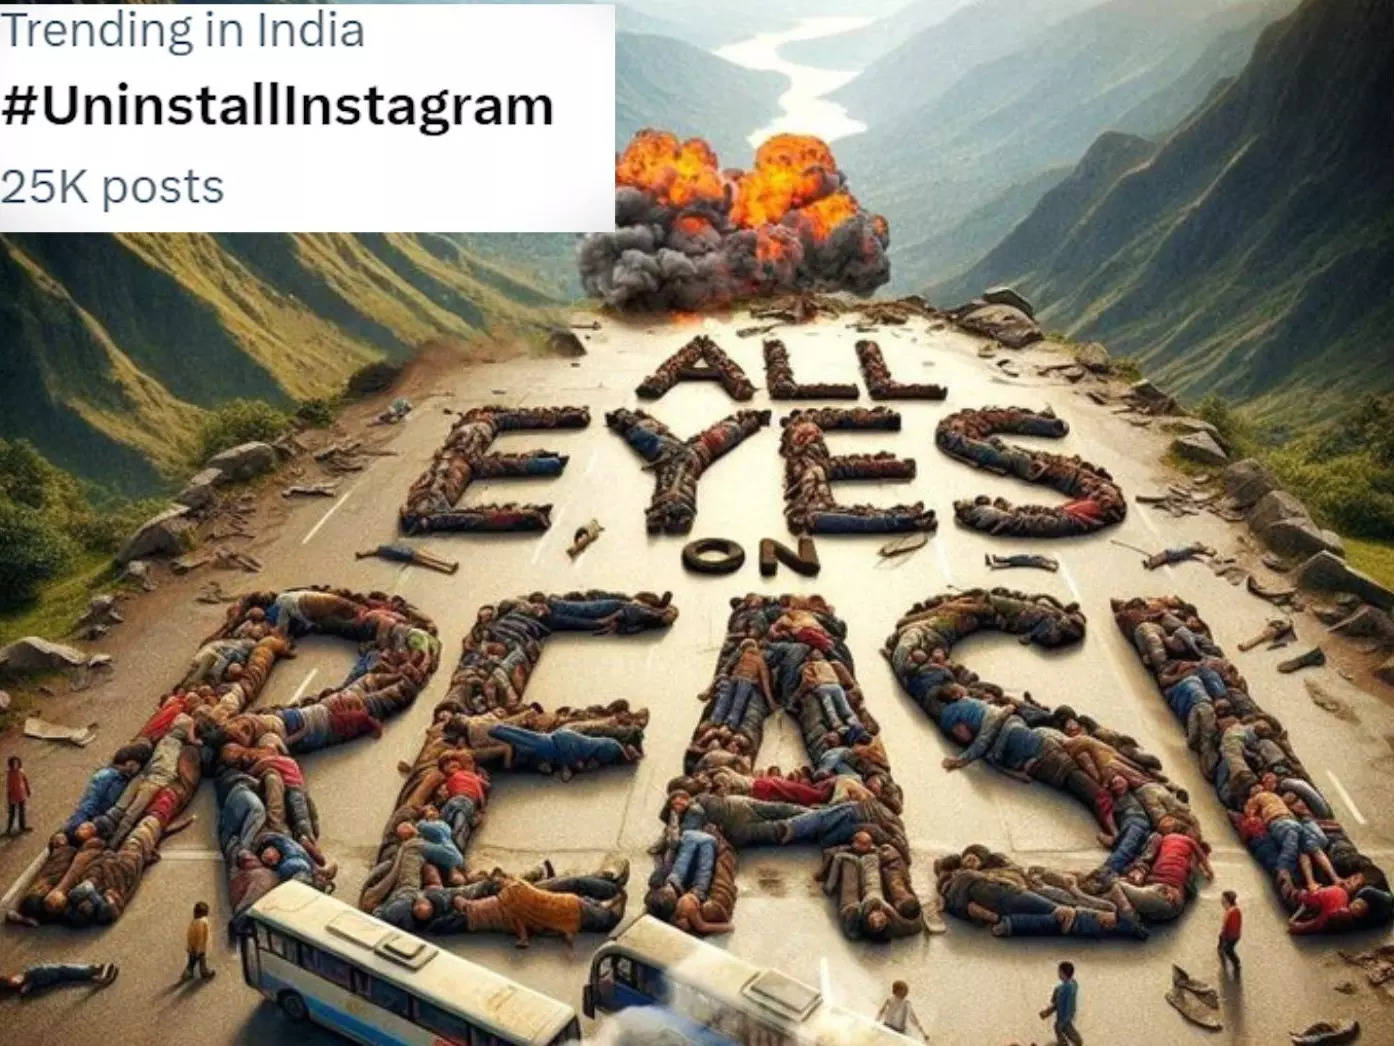 
Reasi terror attack: Why is the hashtag #UninstallInstagram trending on social media?
